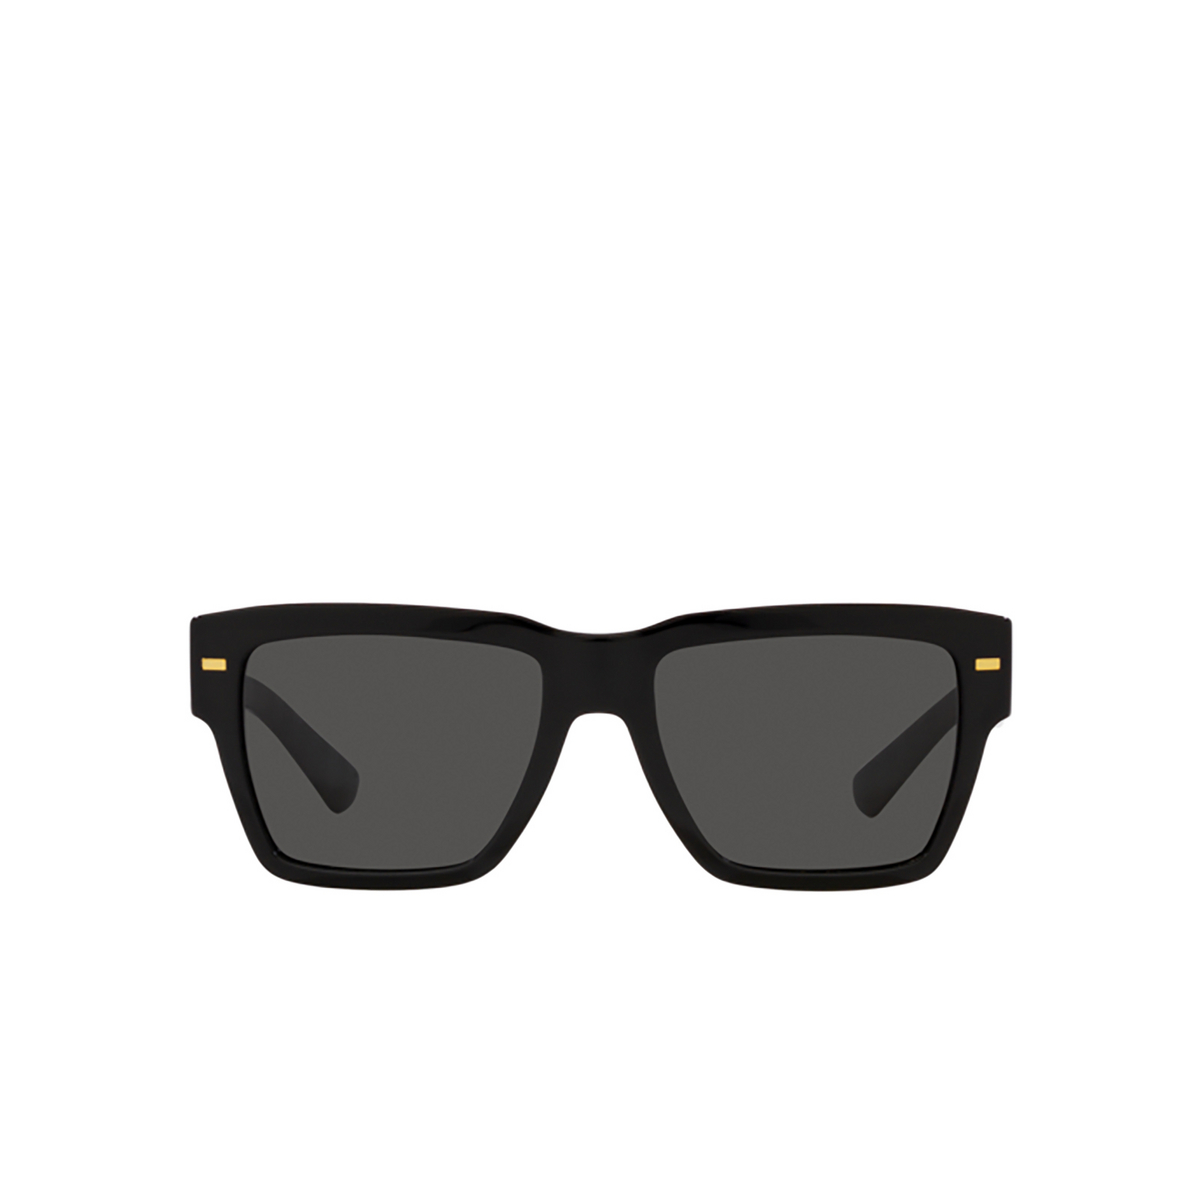 Dolce & Gabbana DG4431 Sunglasses 501/87 Black - front view